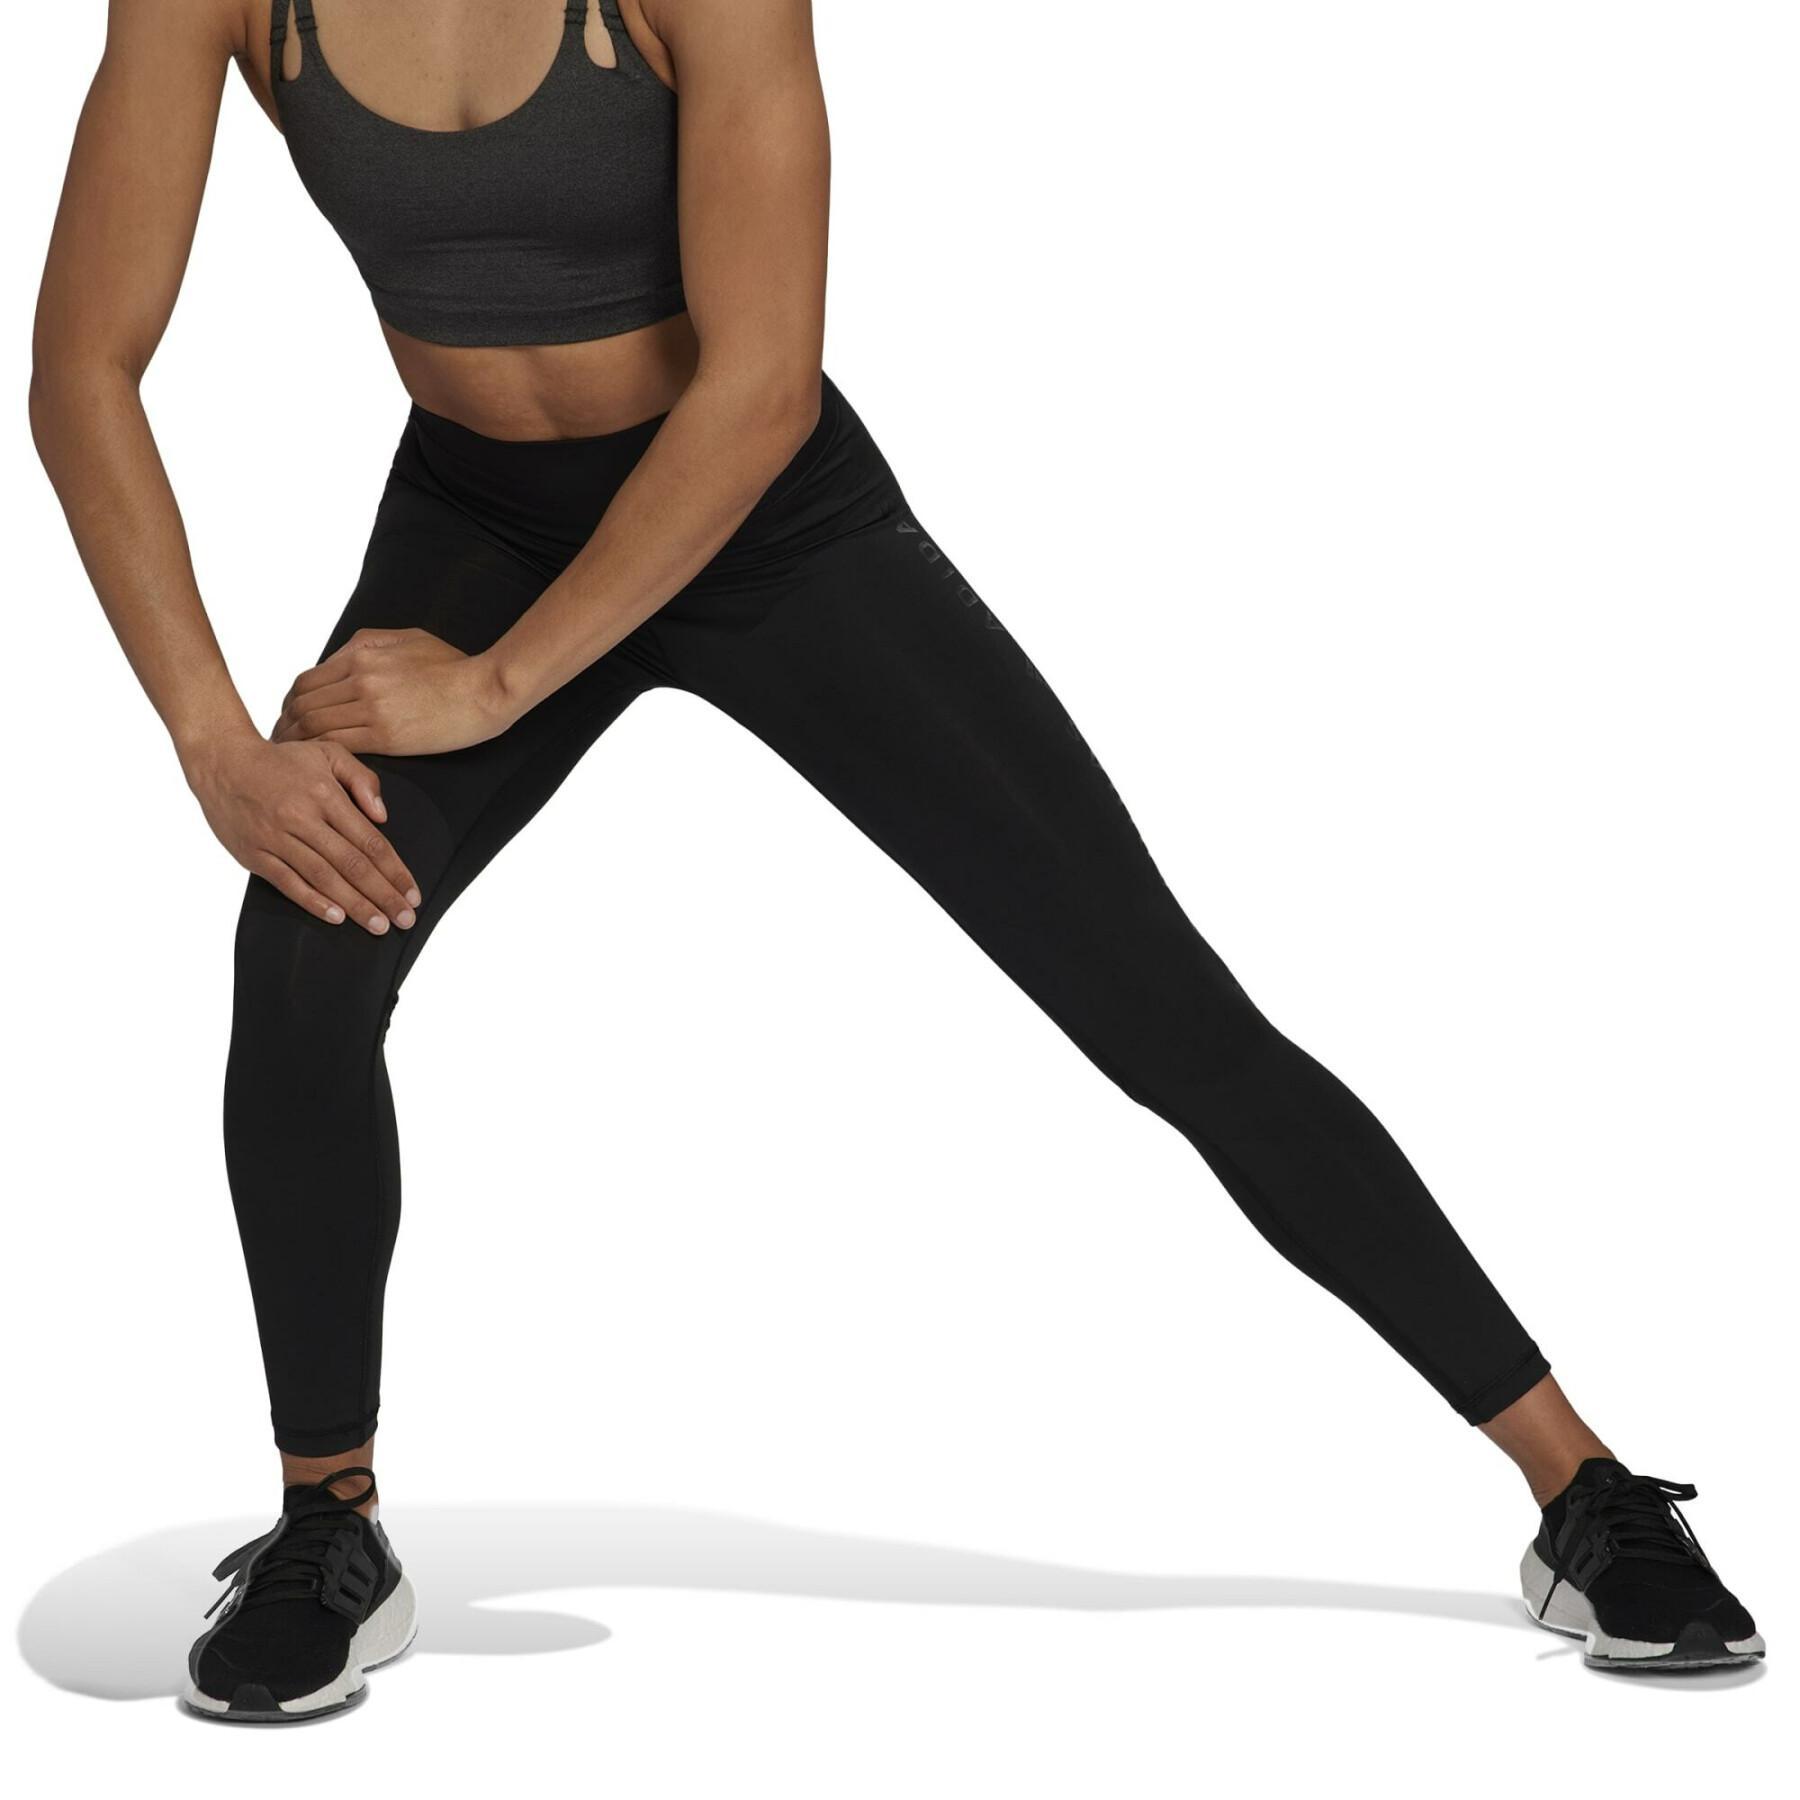 Legging training icons optime 3 bars woman adidas